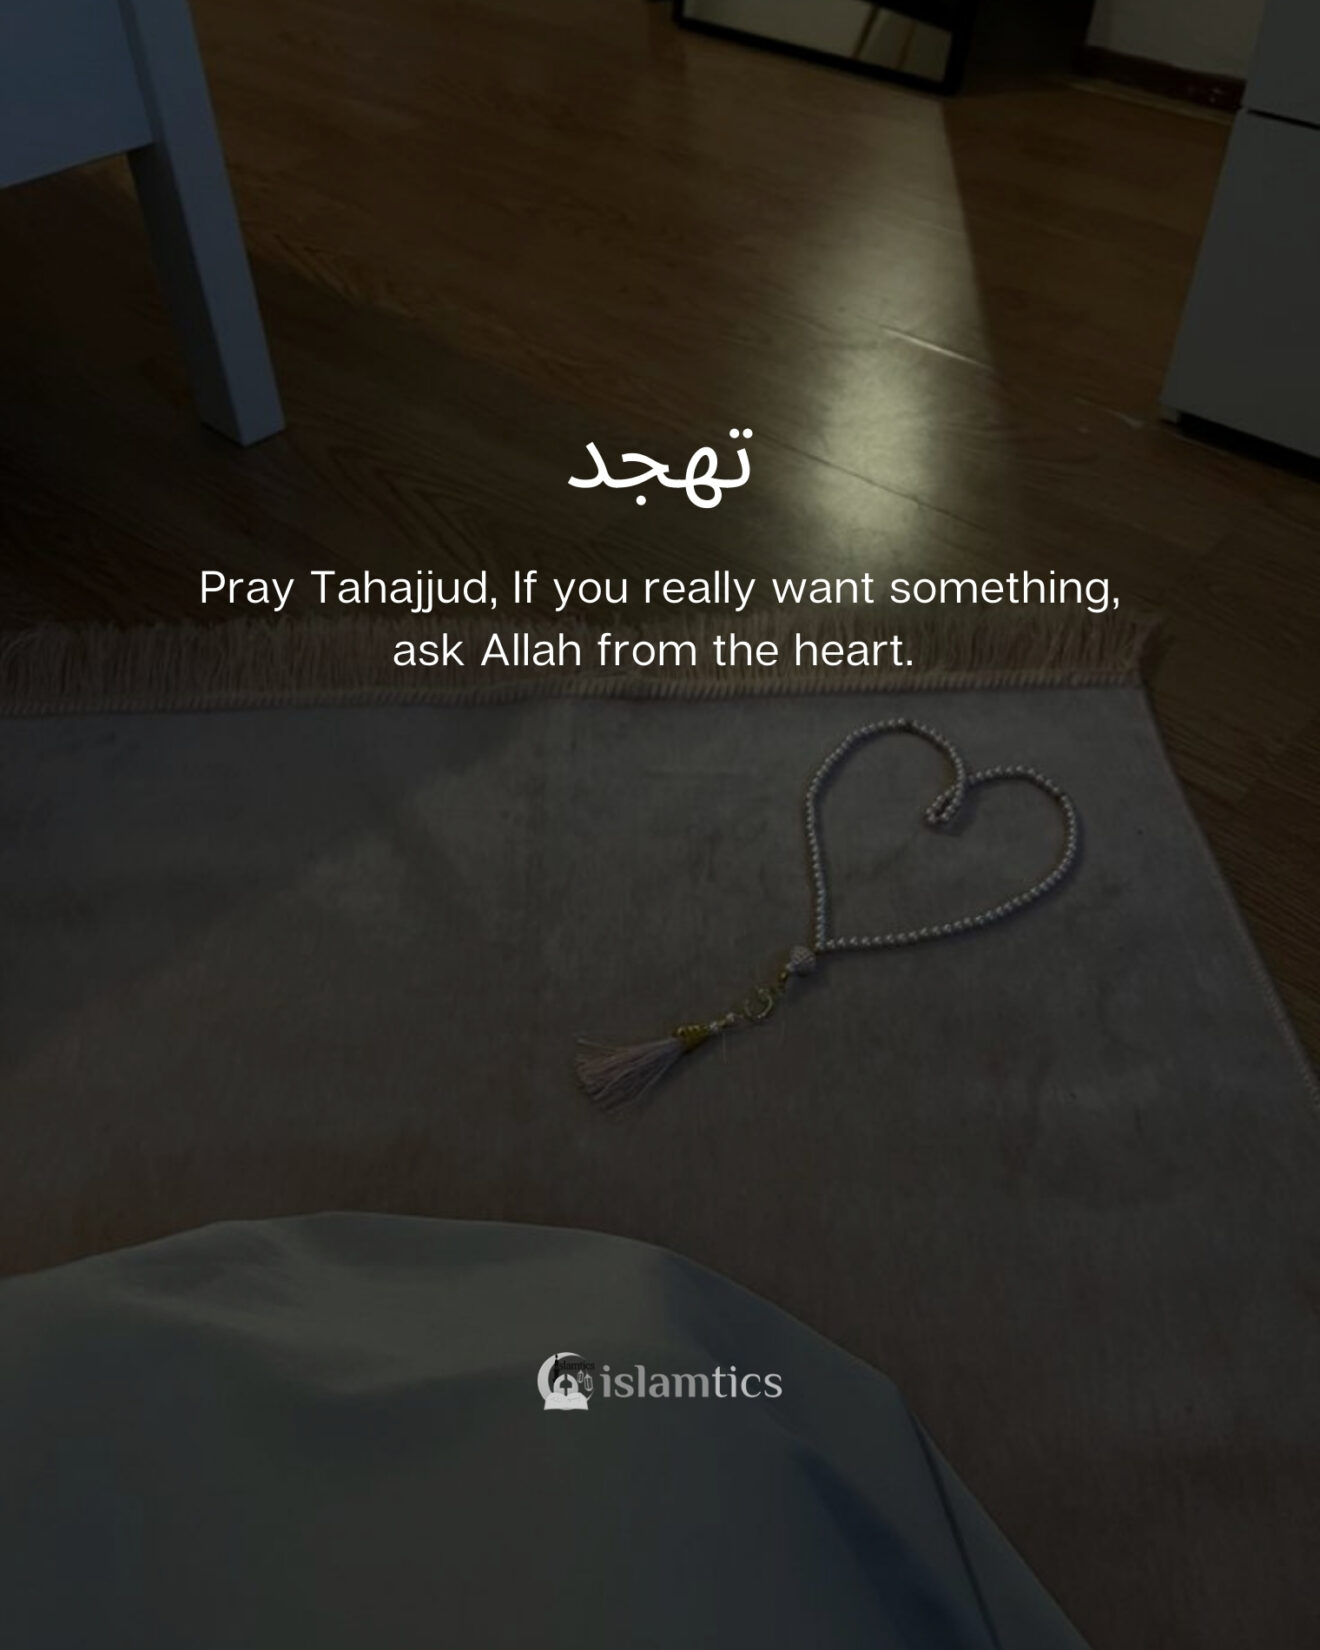  Pray Tahajjud, If you really want something, ask from the heart.